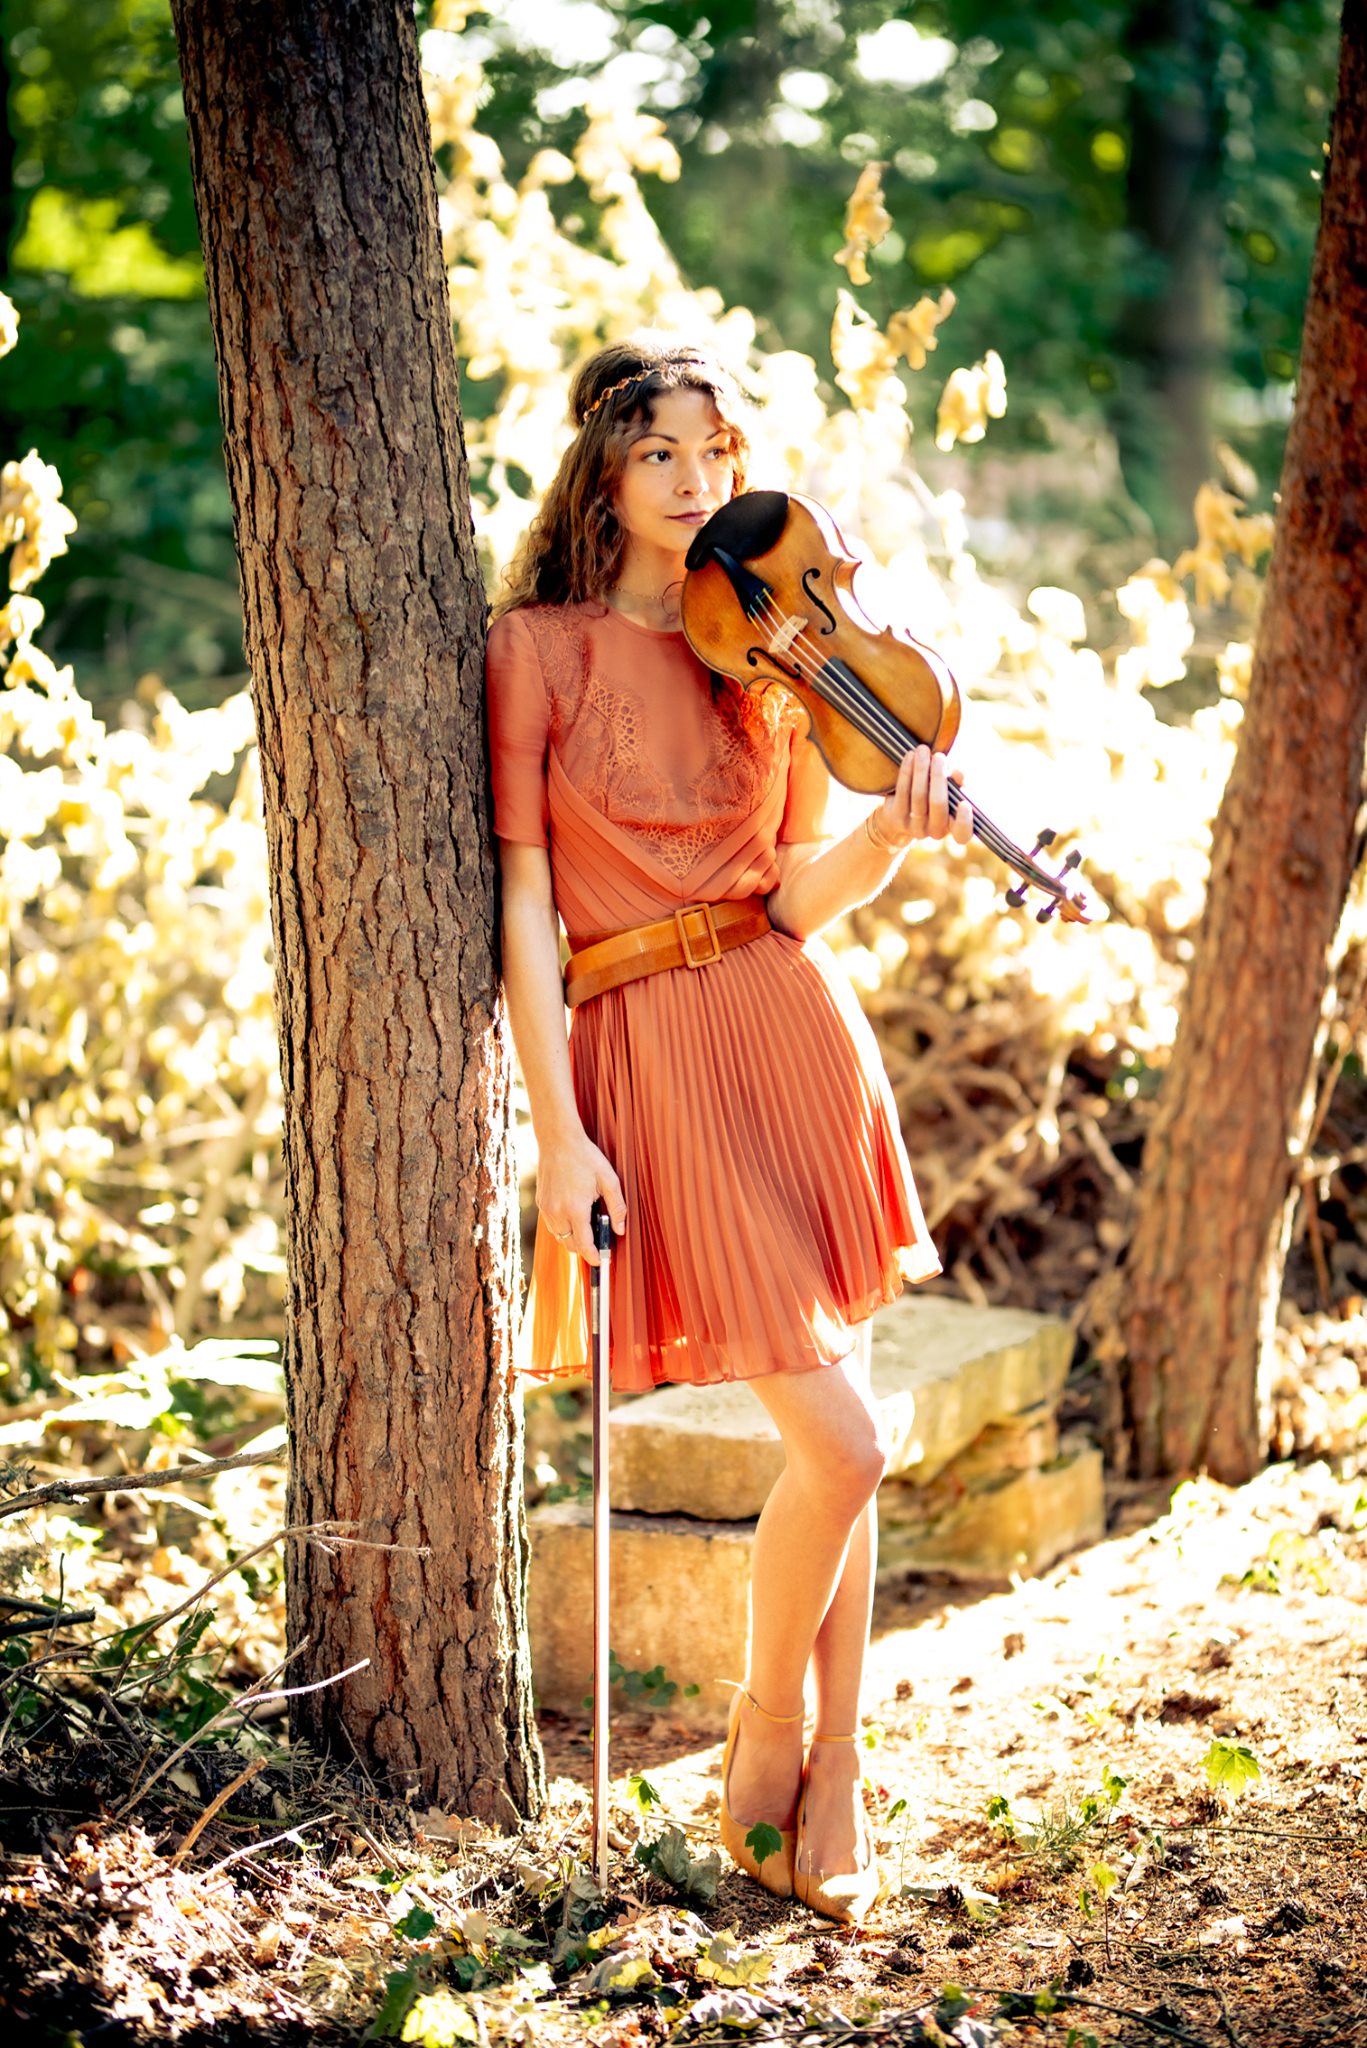 The violinist Maya Levy